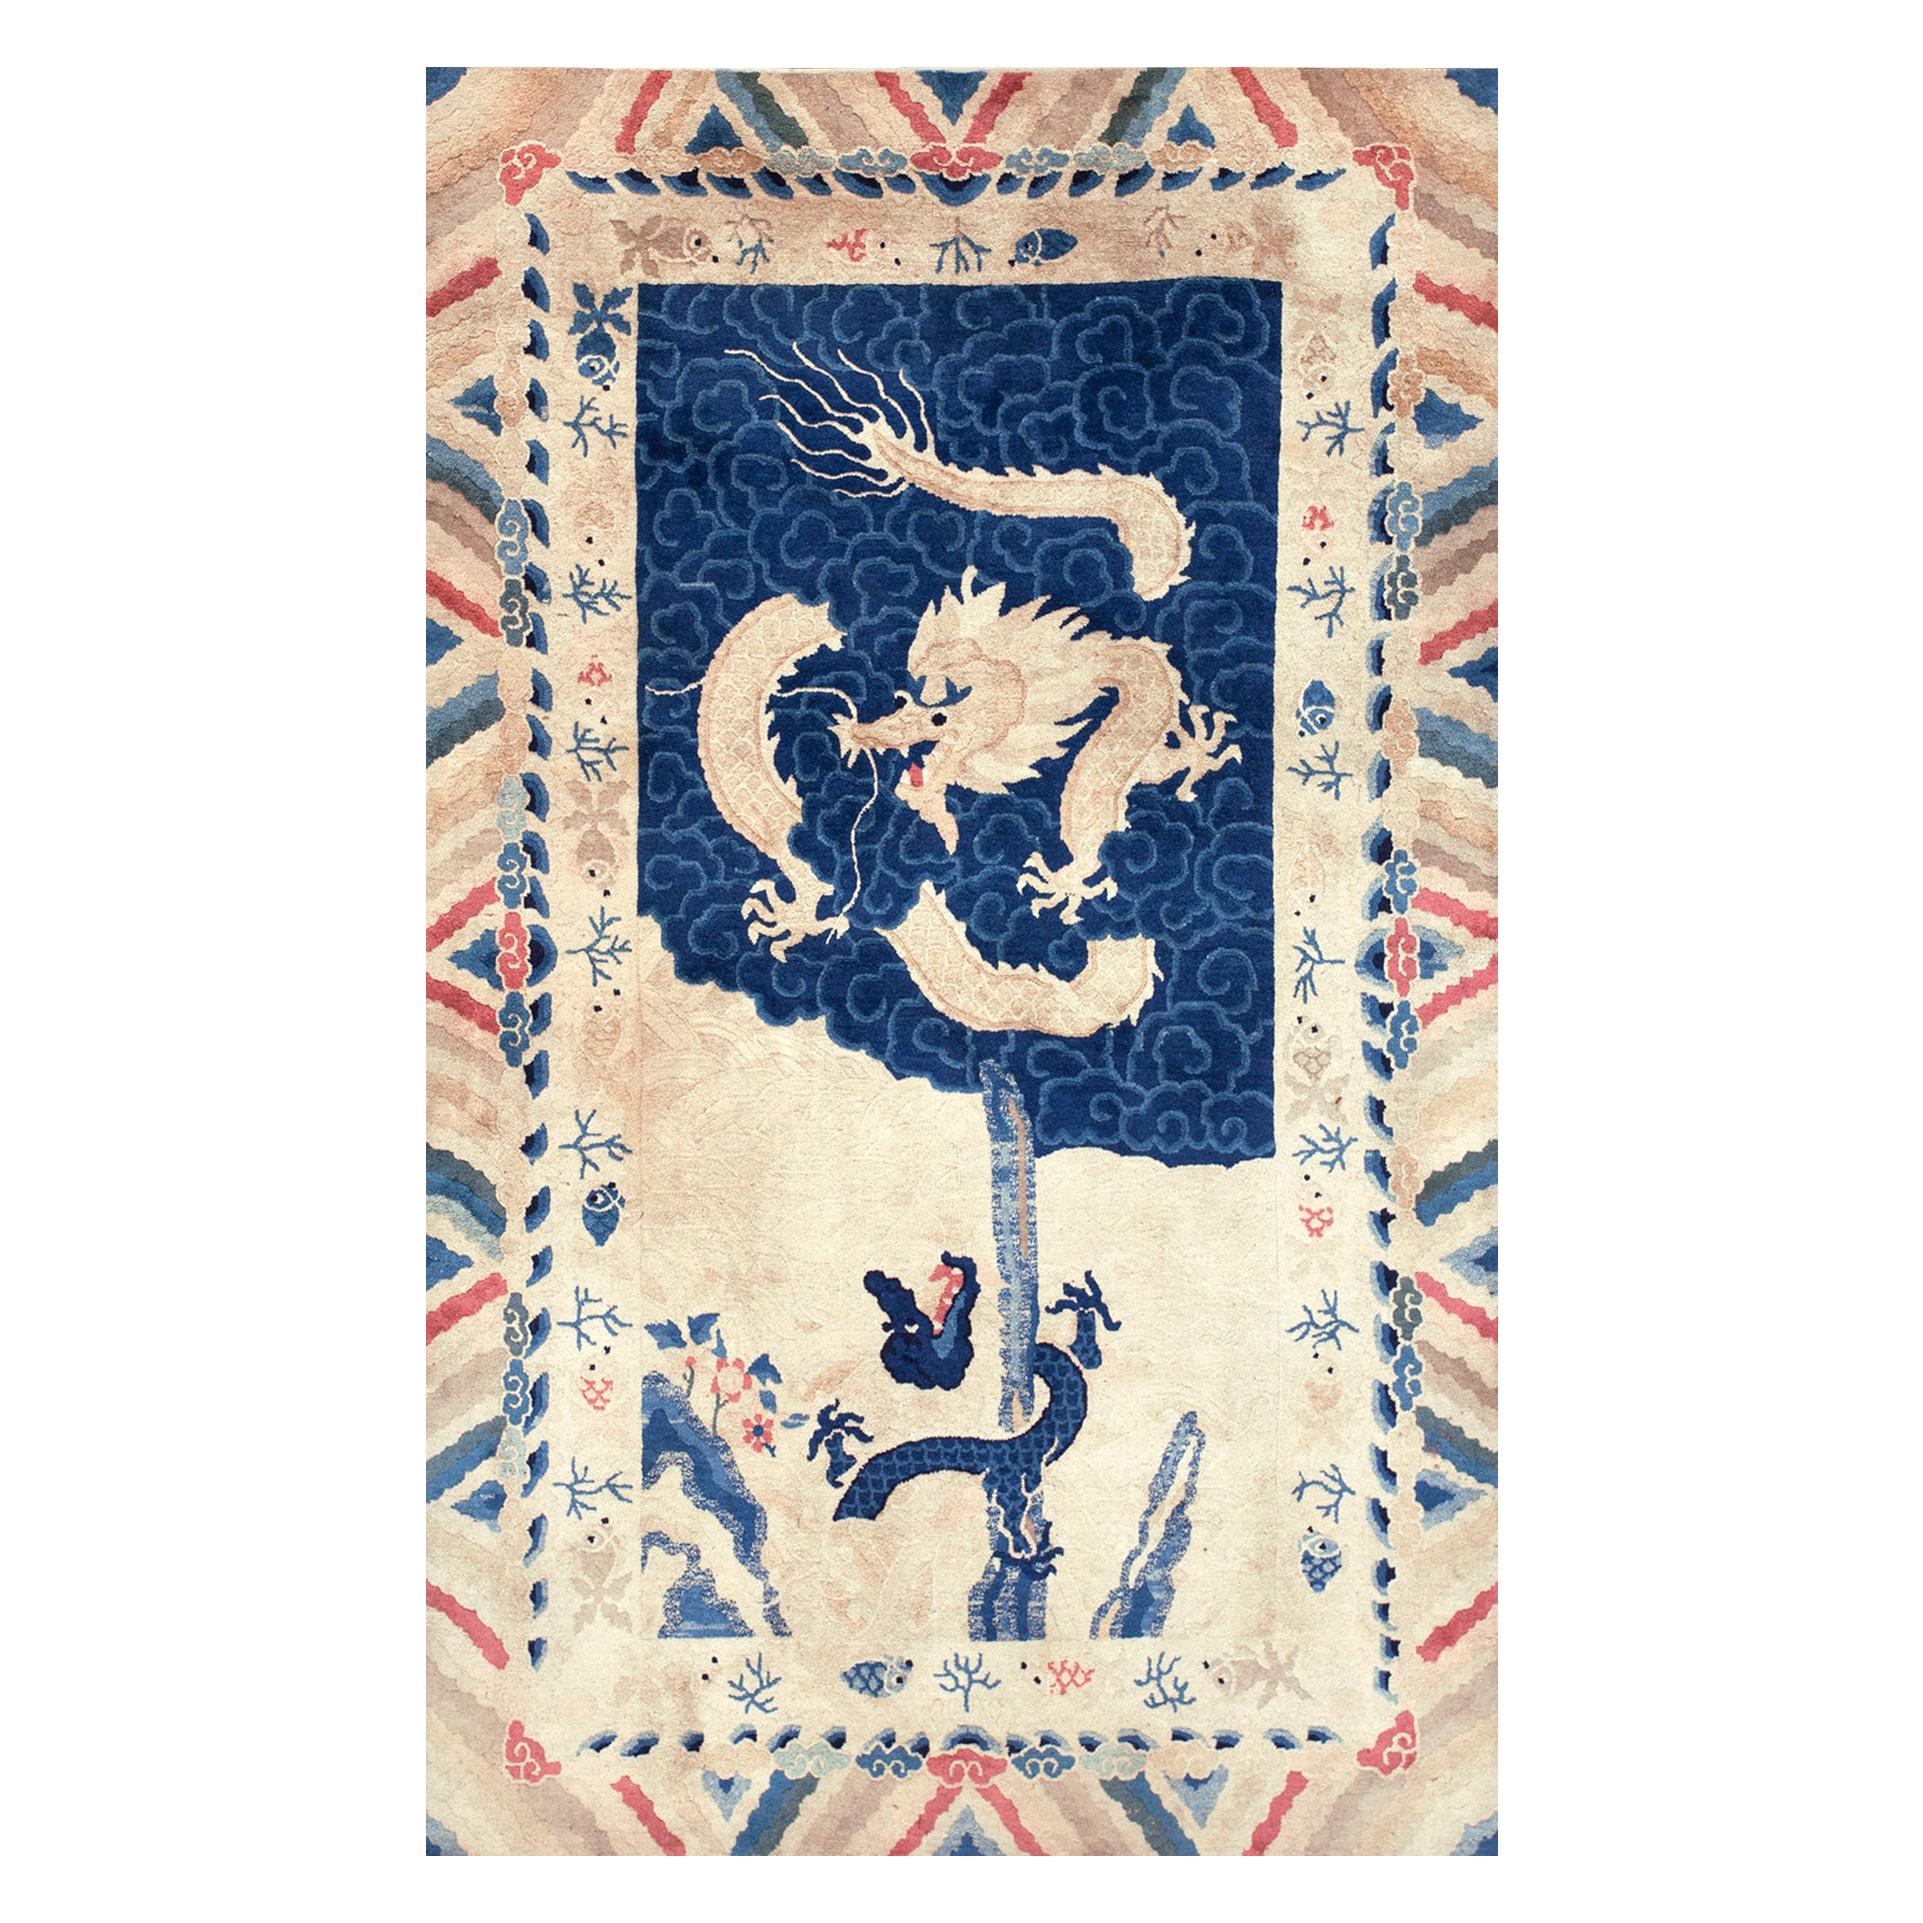 Early 20th Century Chinese Peking Dragon Carpet ( 4'2" x 6'10" - 127 x 208 )